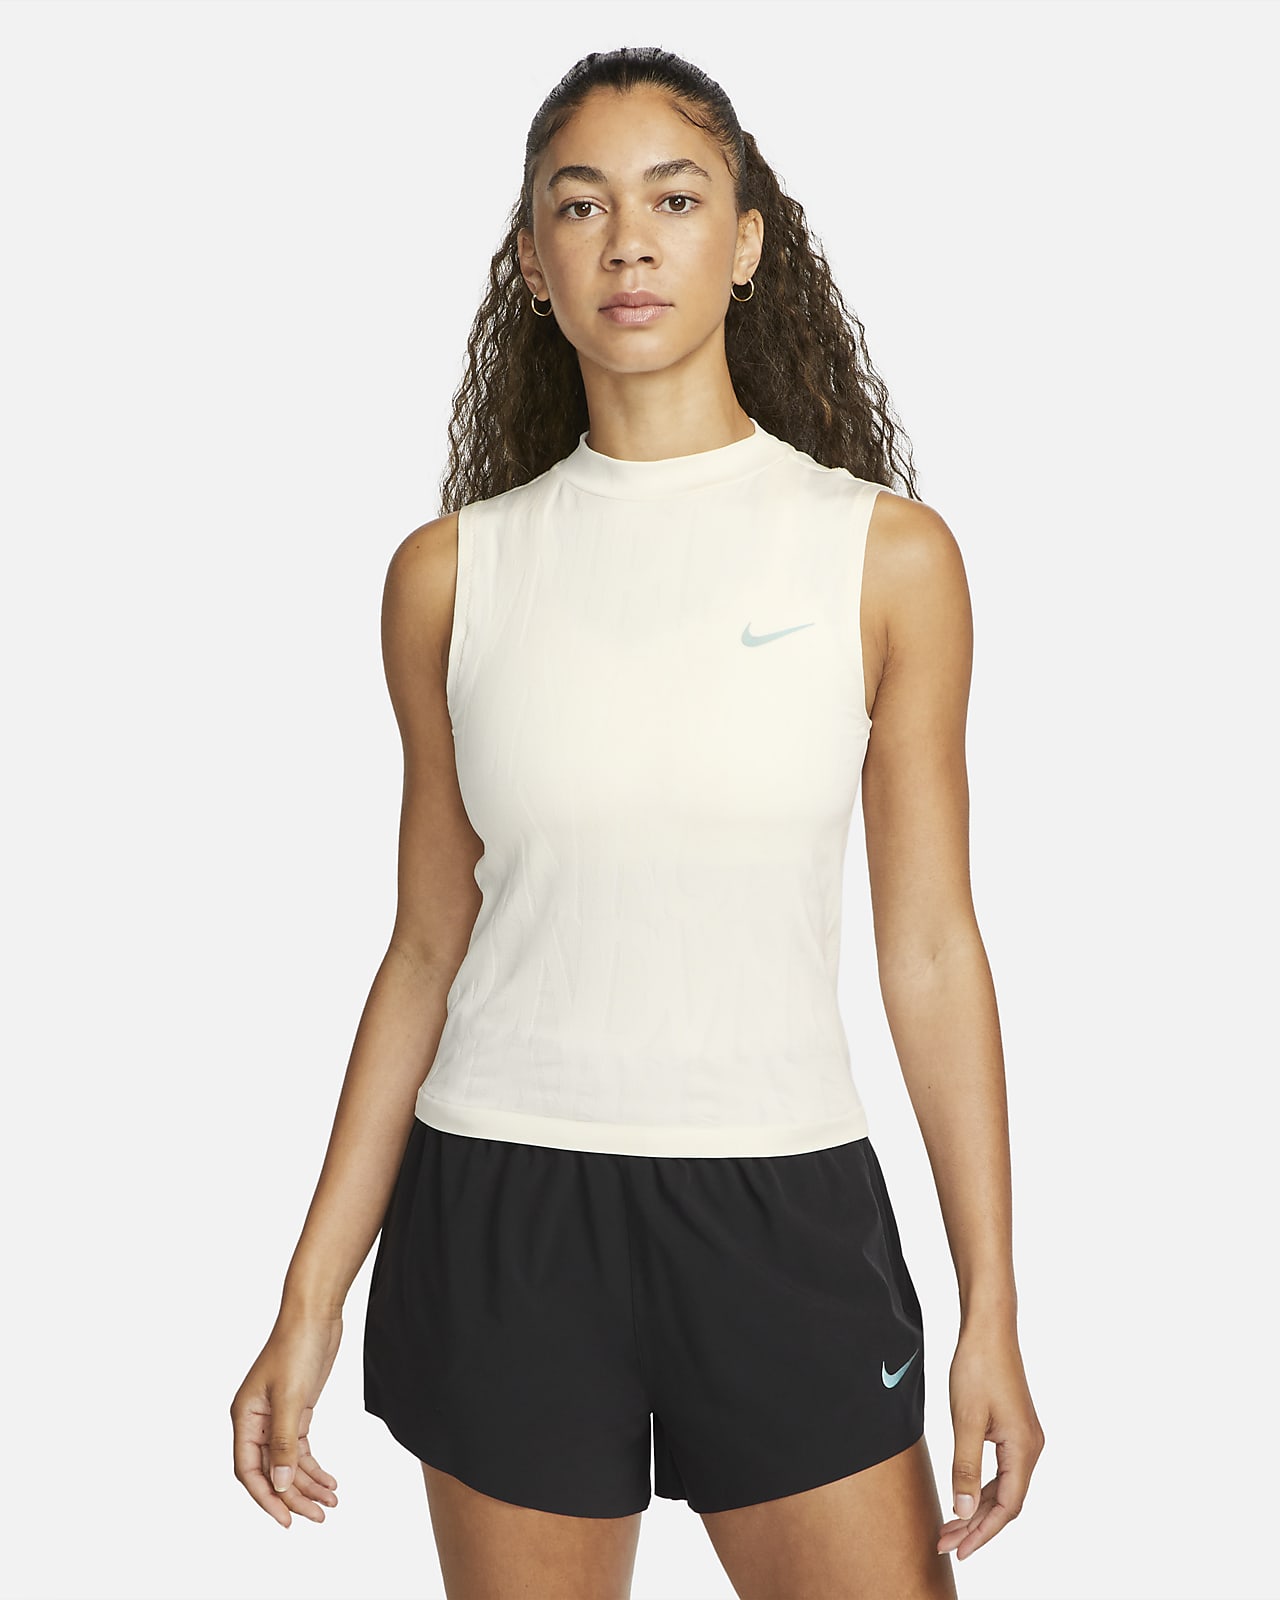 Nike Running Division Women's Tank Top. Nike BE